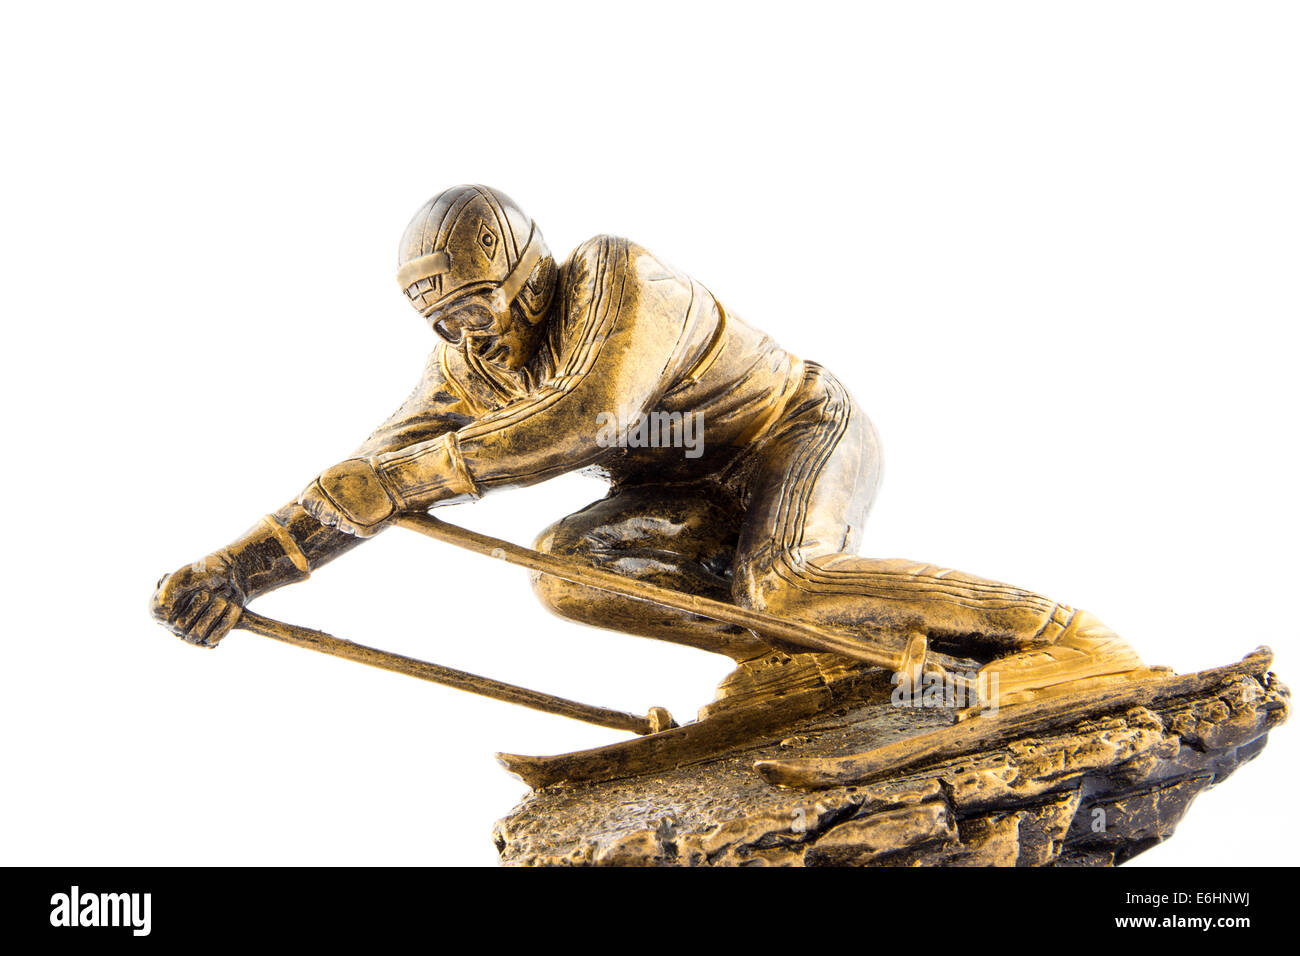 Gold ski champion statuette award isolated on white background Stock Photo